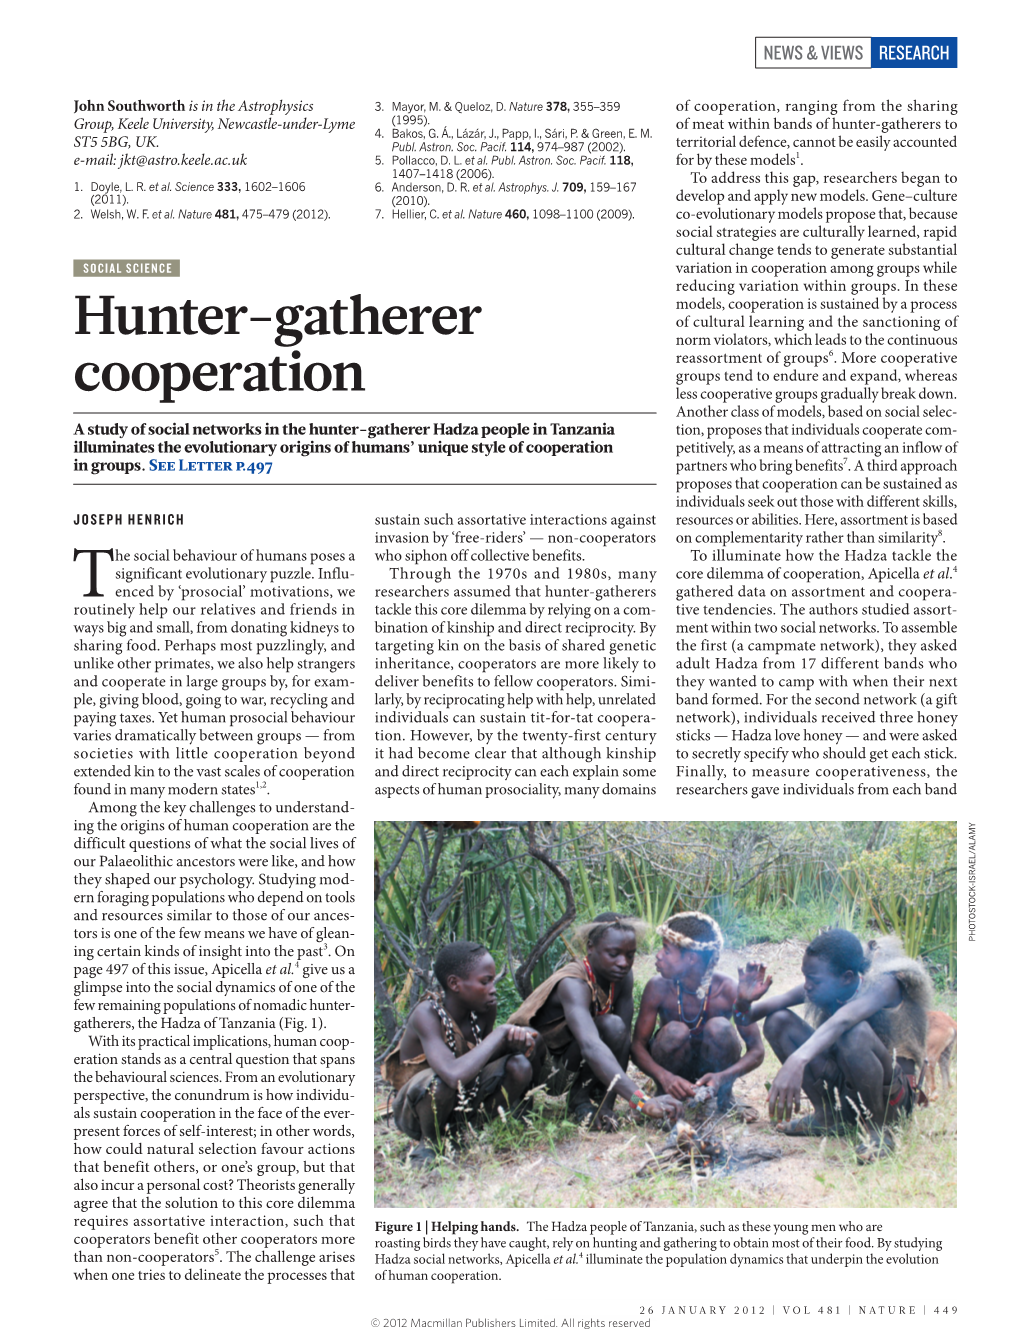 Hunter-Gatherer Cooperation